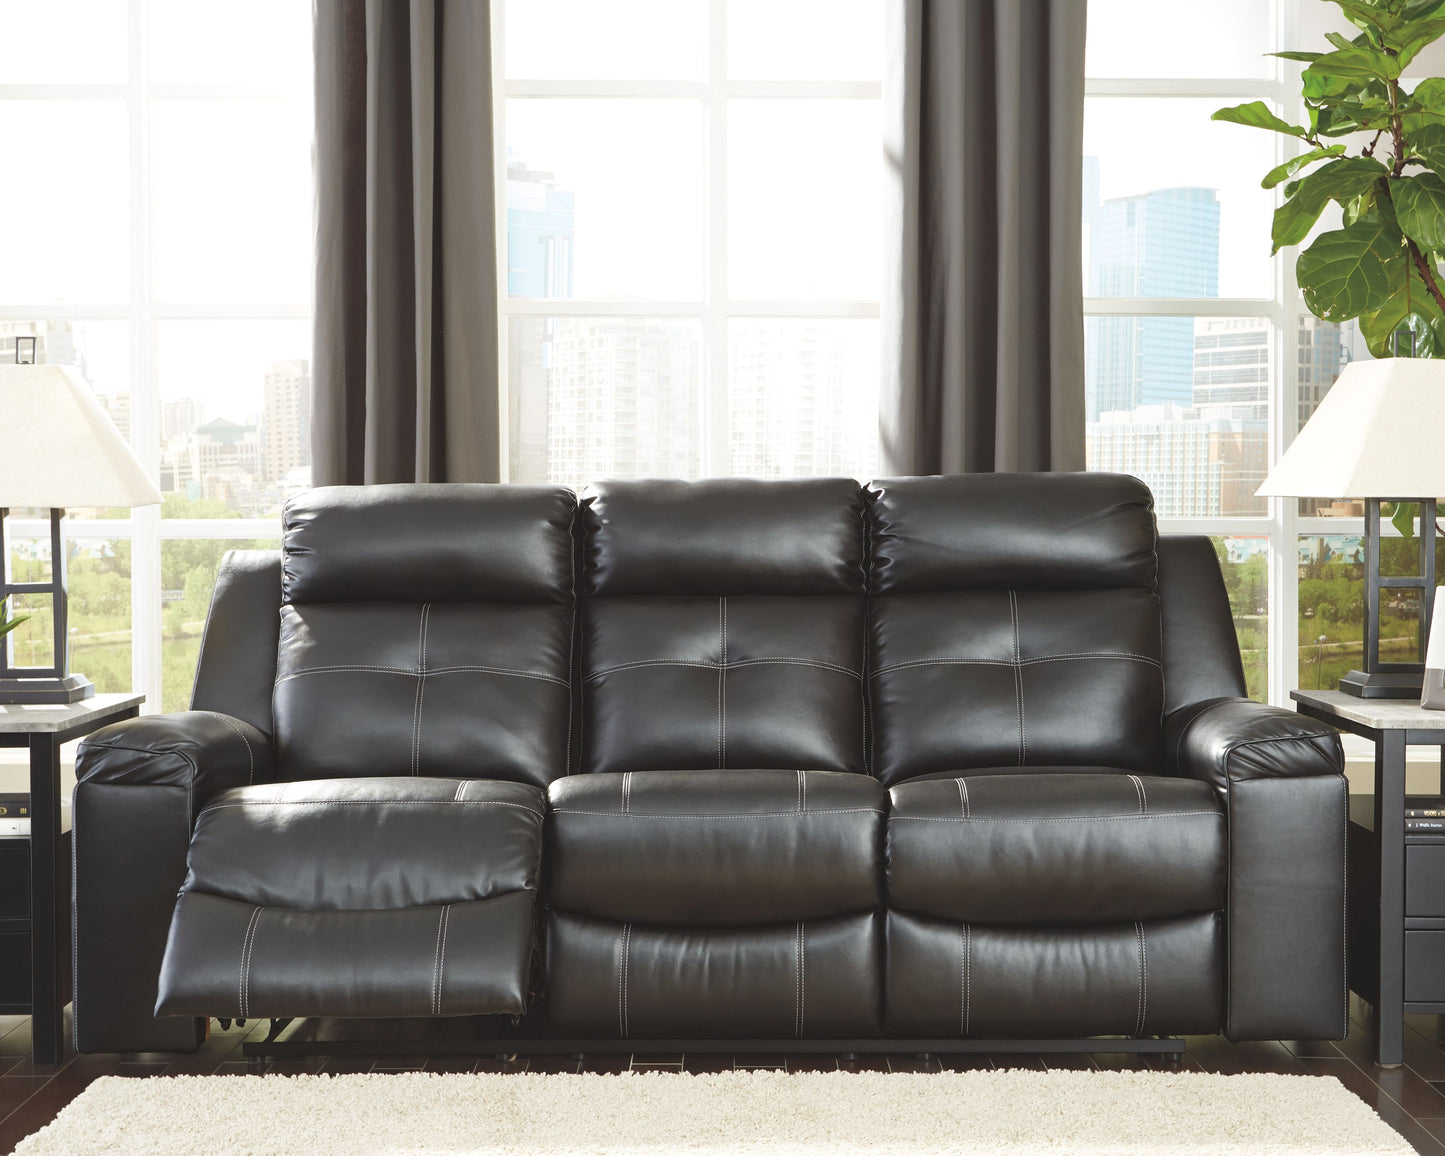 Kempten - Black - Reclining Sofa